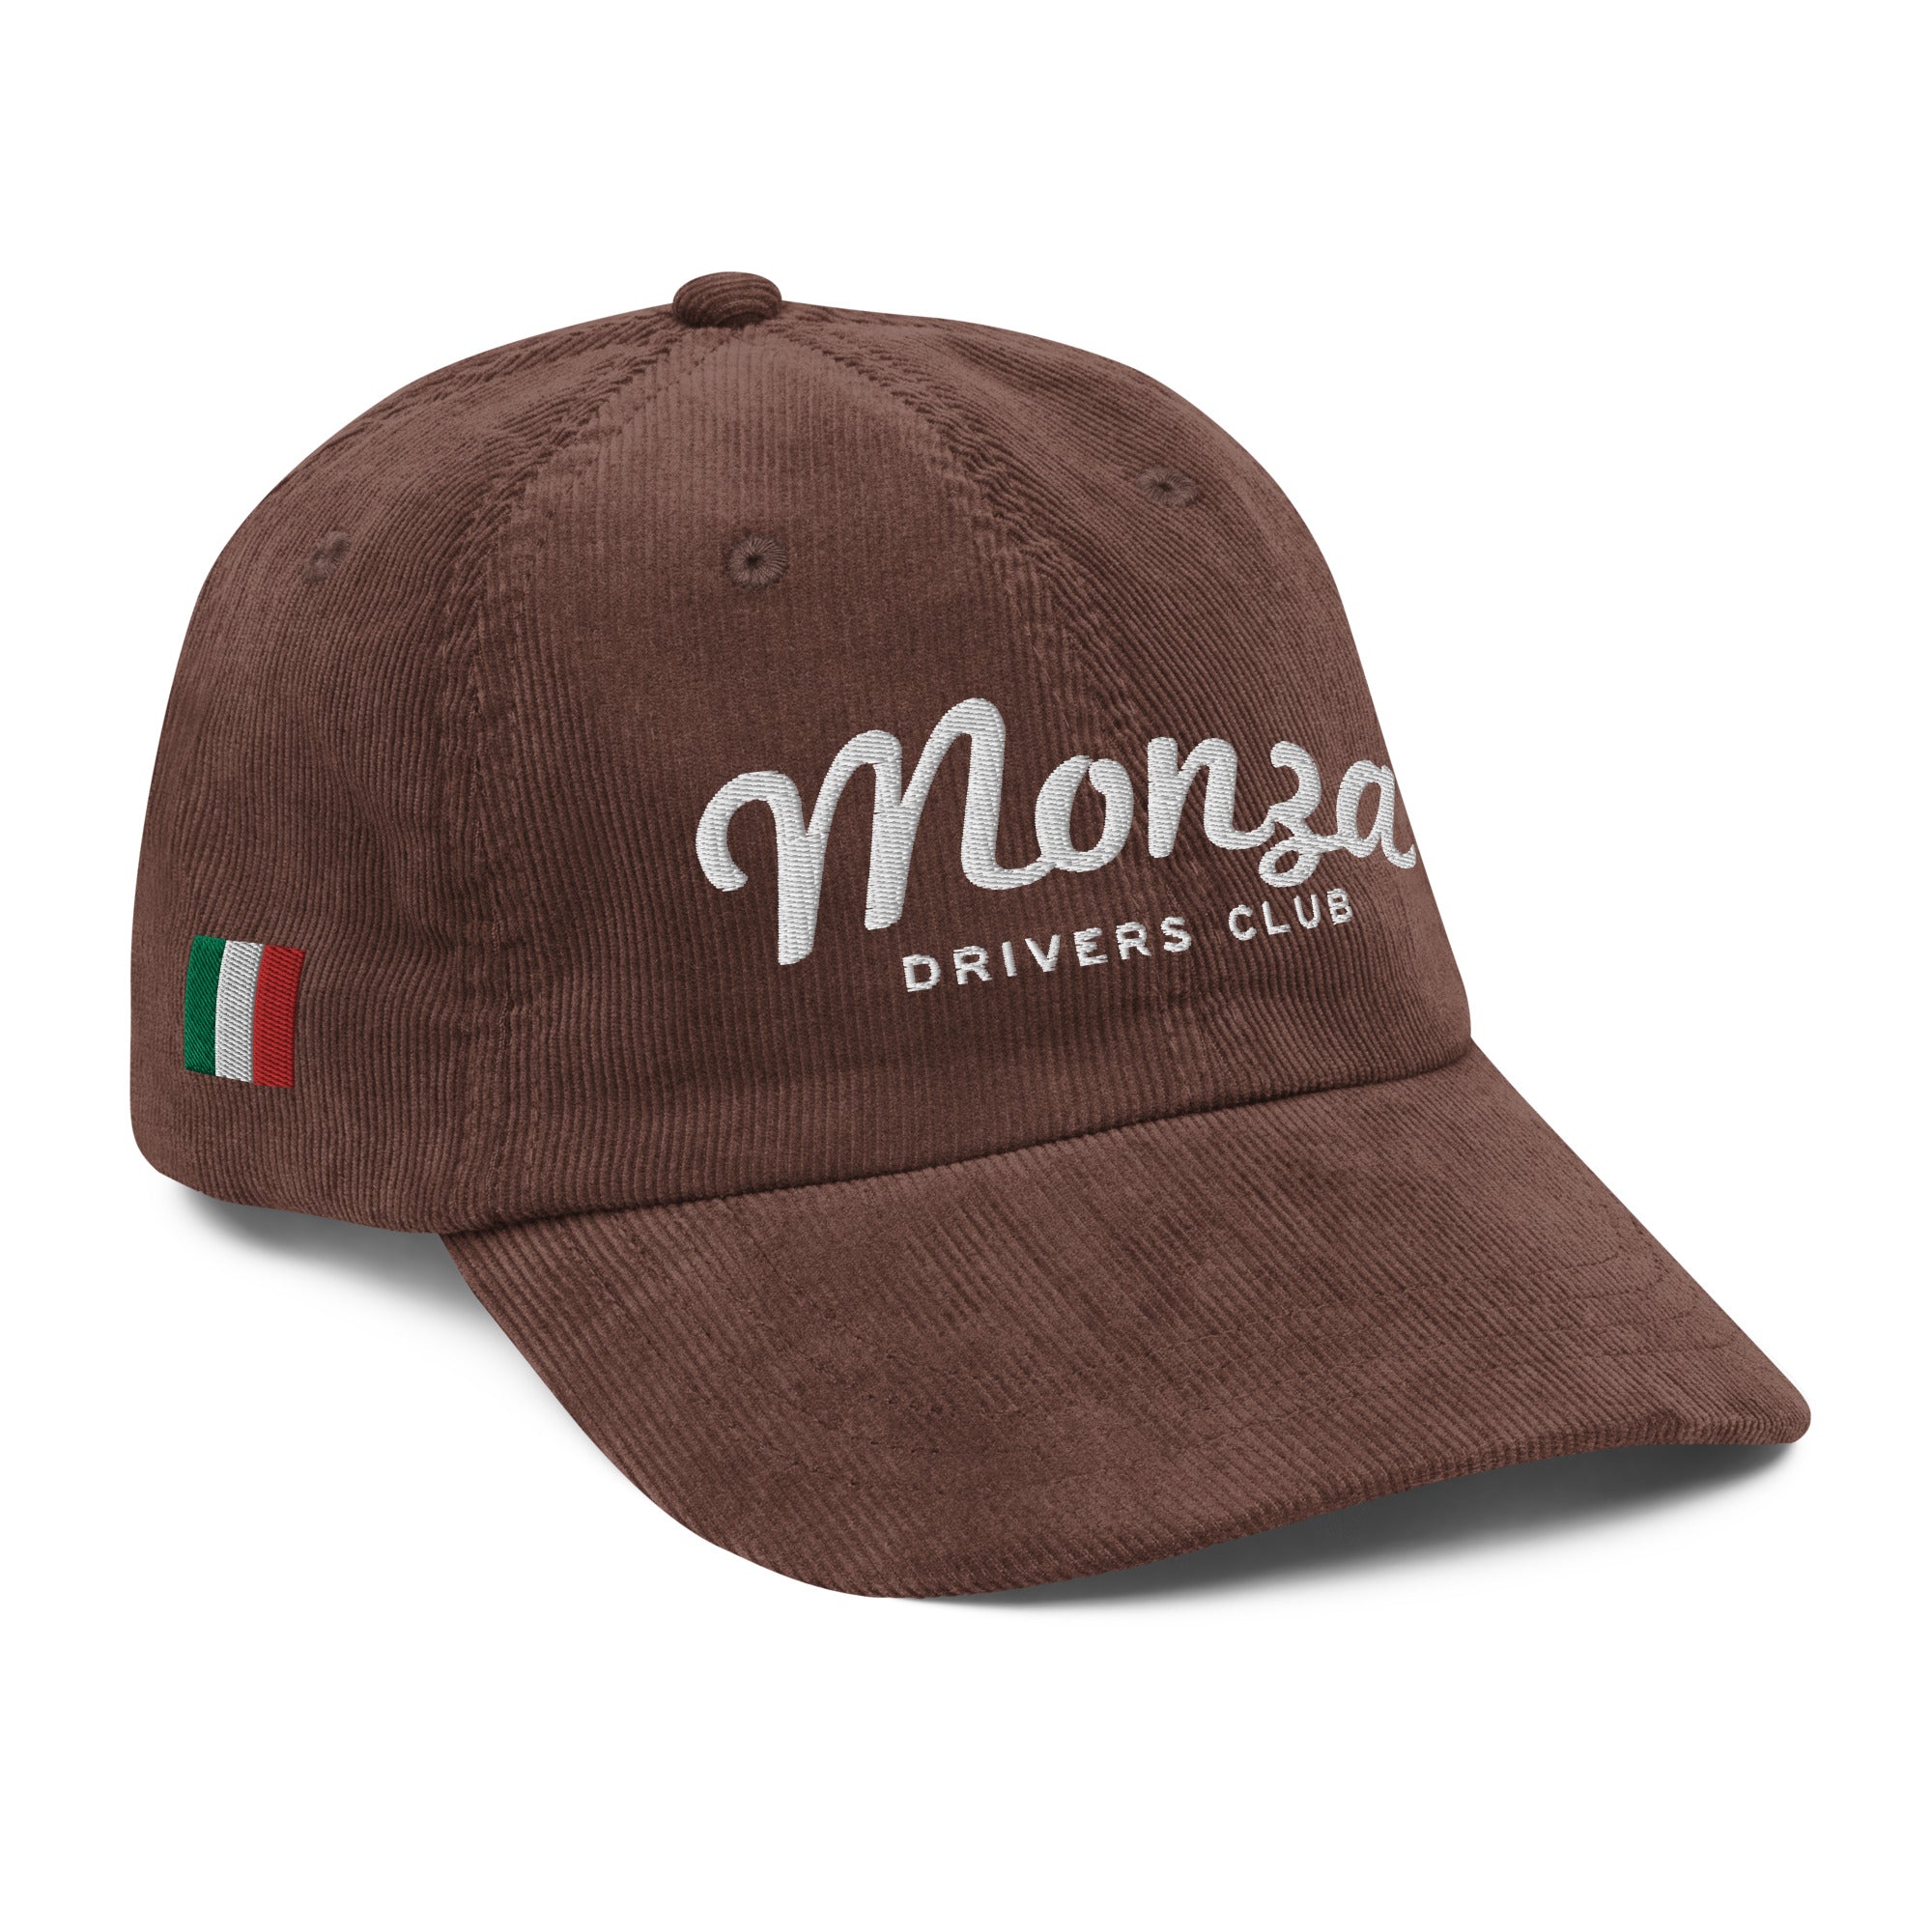 Monza Drivers Club Corduroy Hat